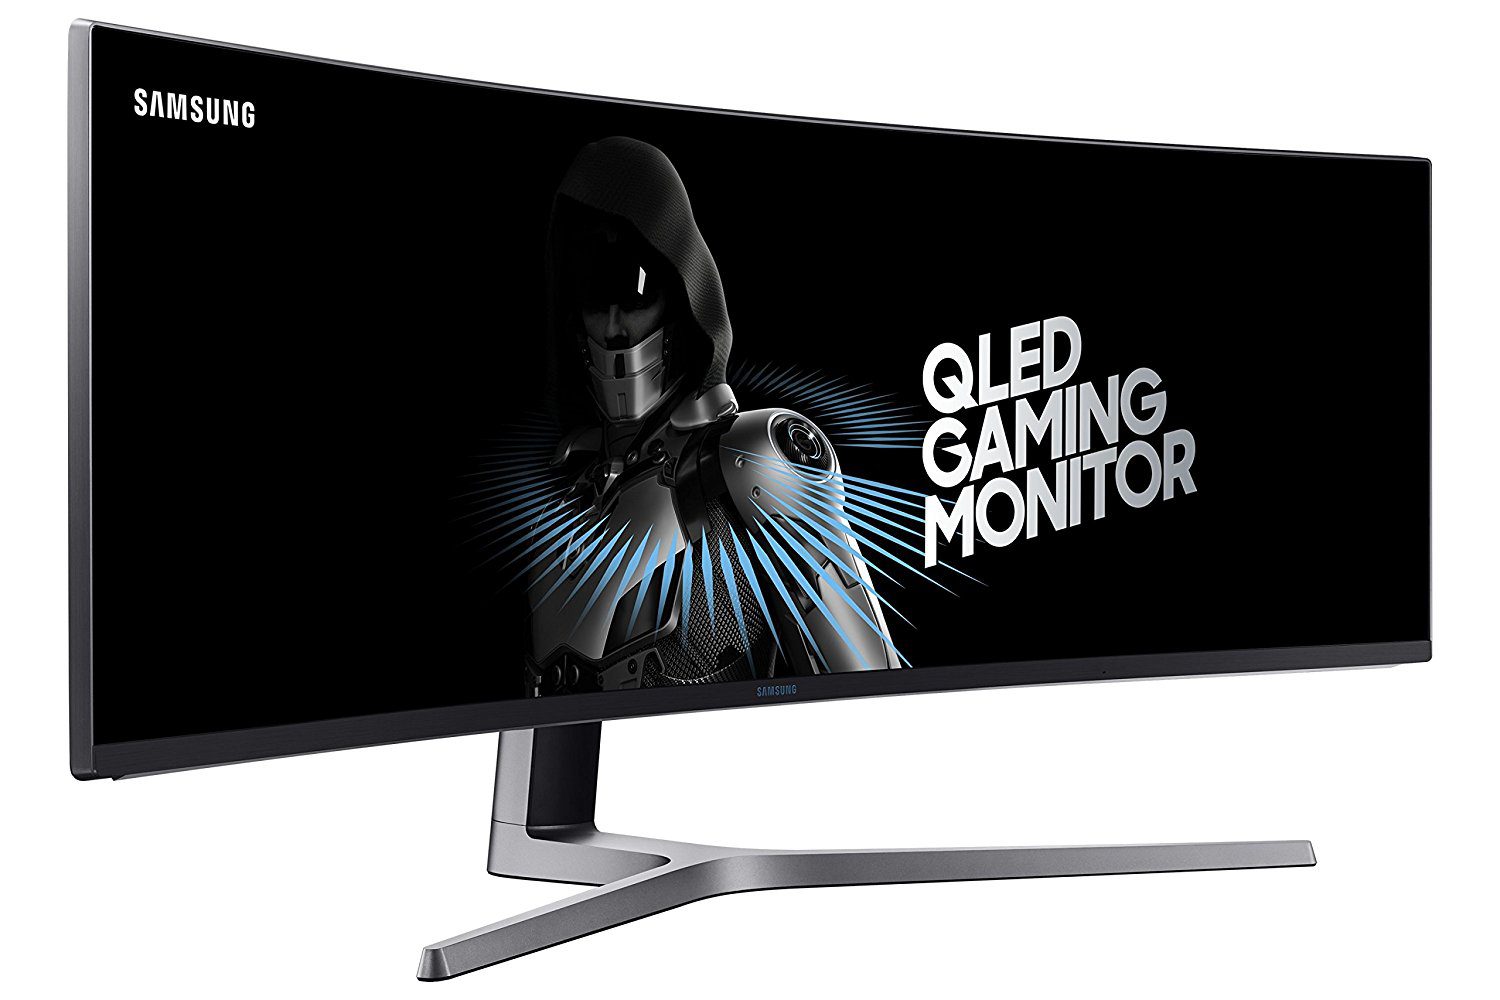 Samsung’s *49-inch* Gaming Monitor